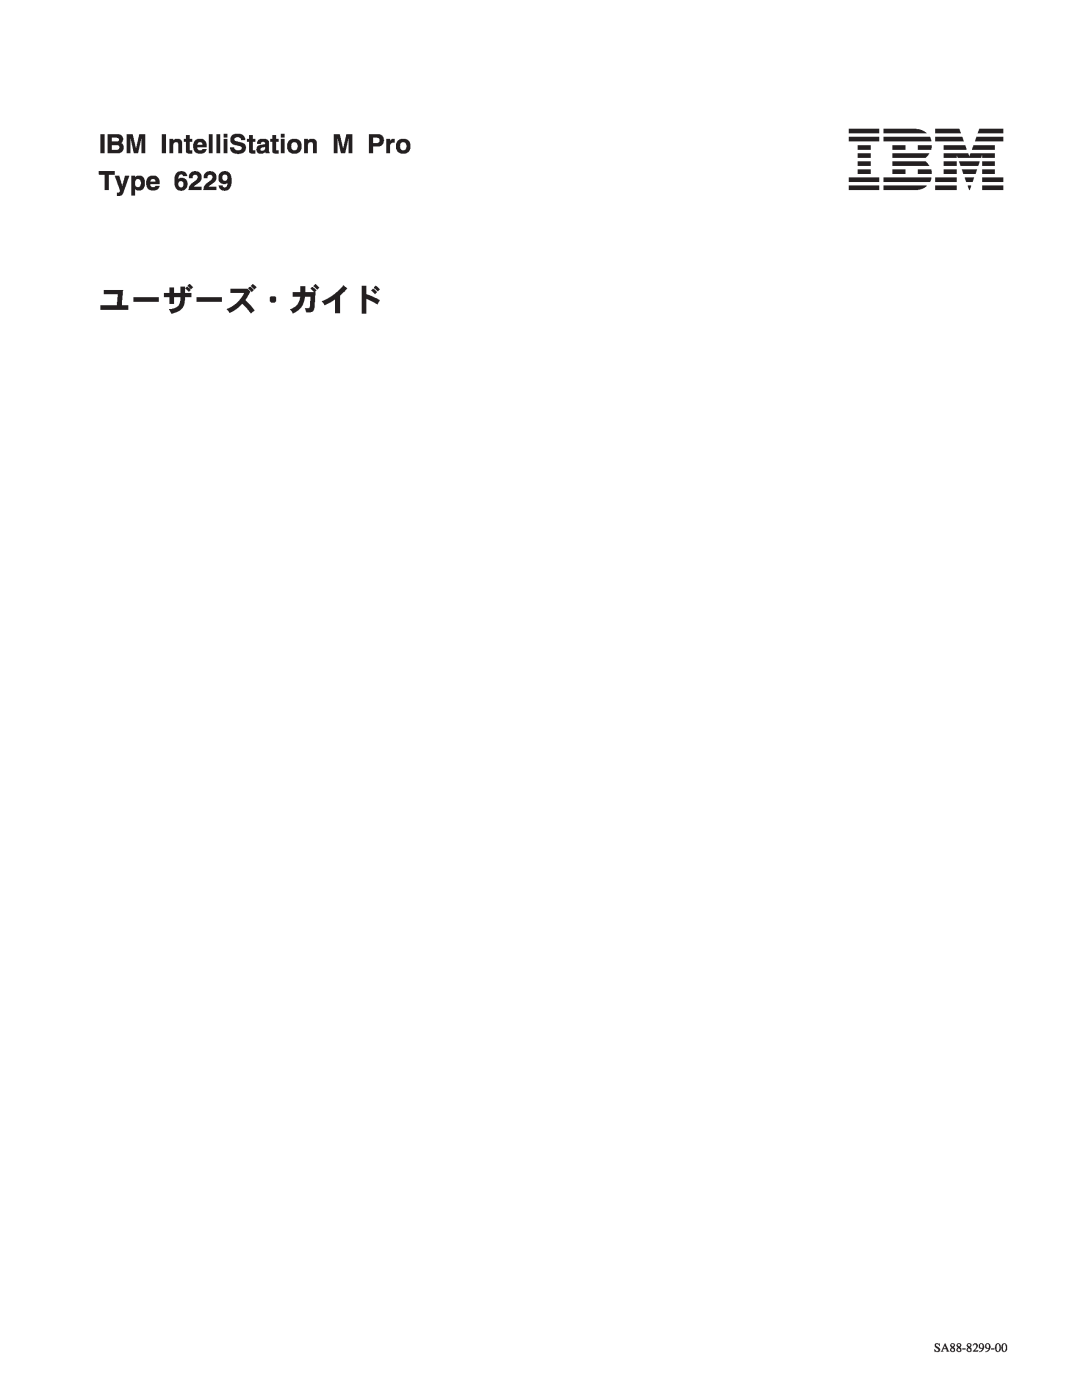 IBM 6229 manual IBM IntelliStation M Pro, Type, SA88-8299-00 